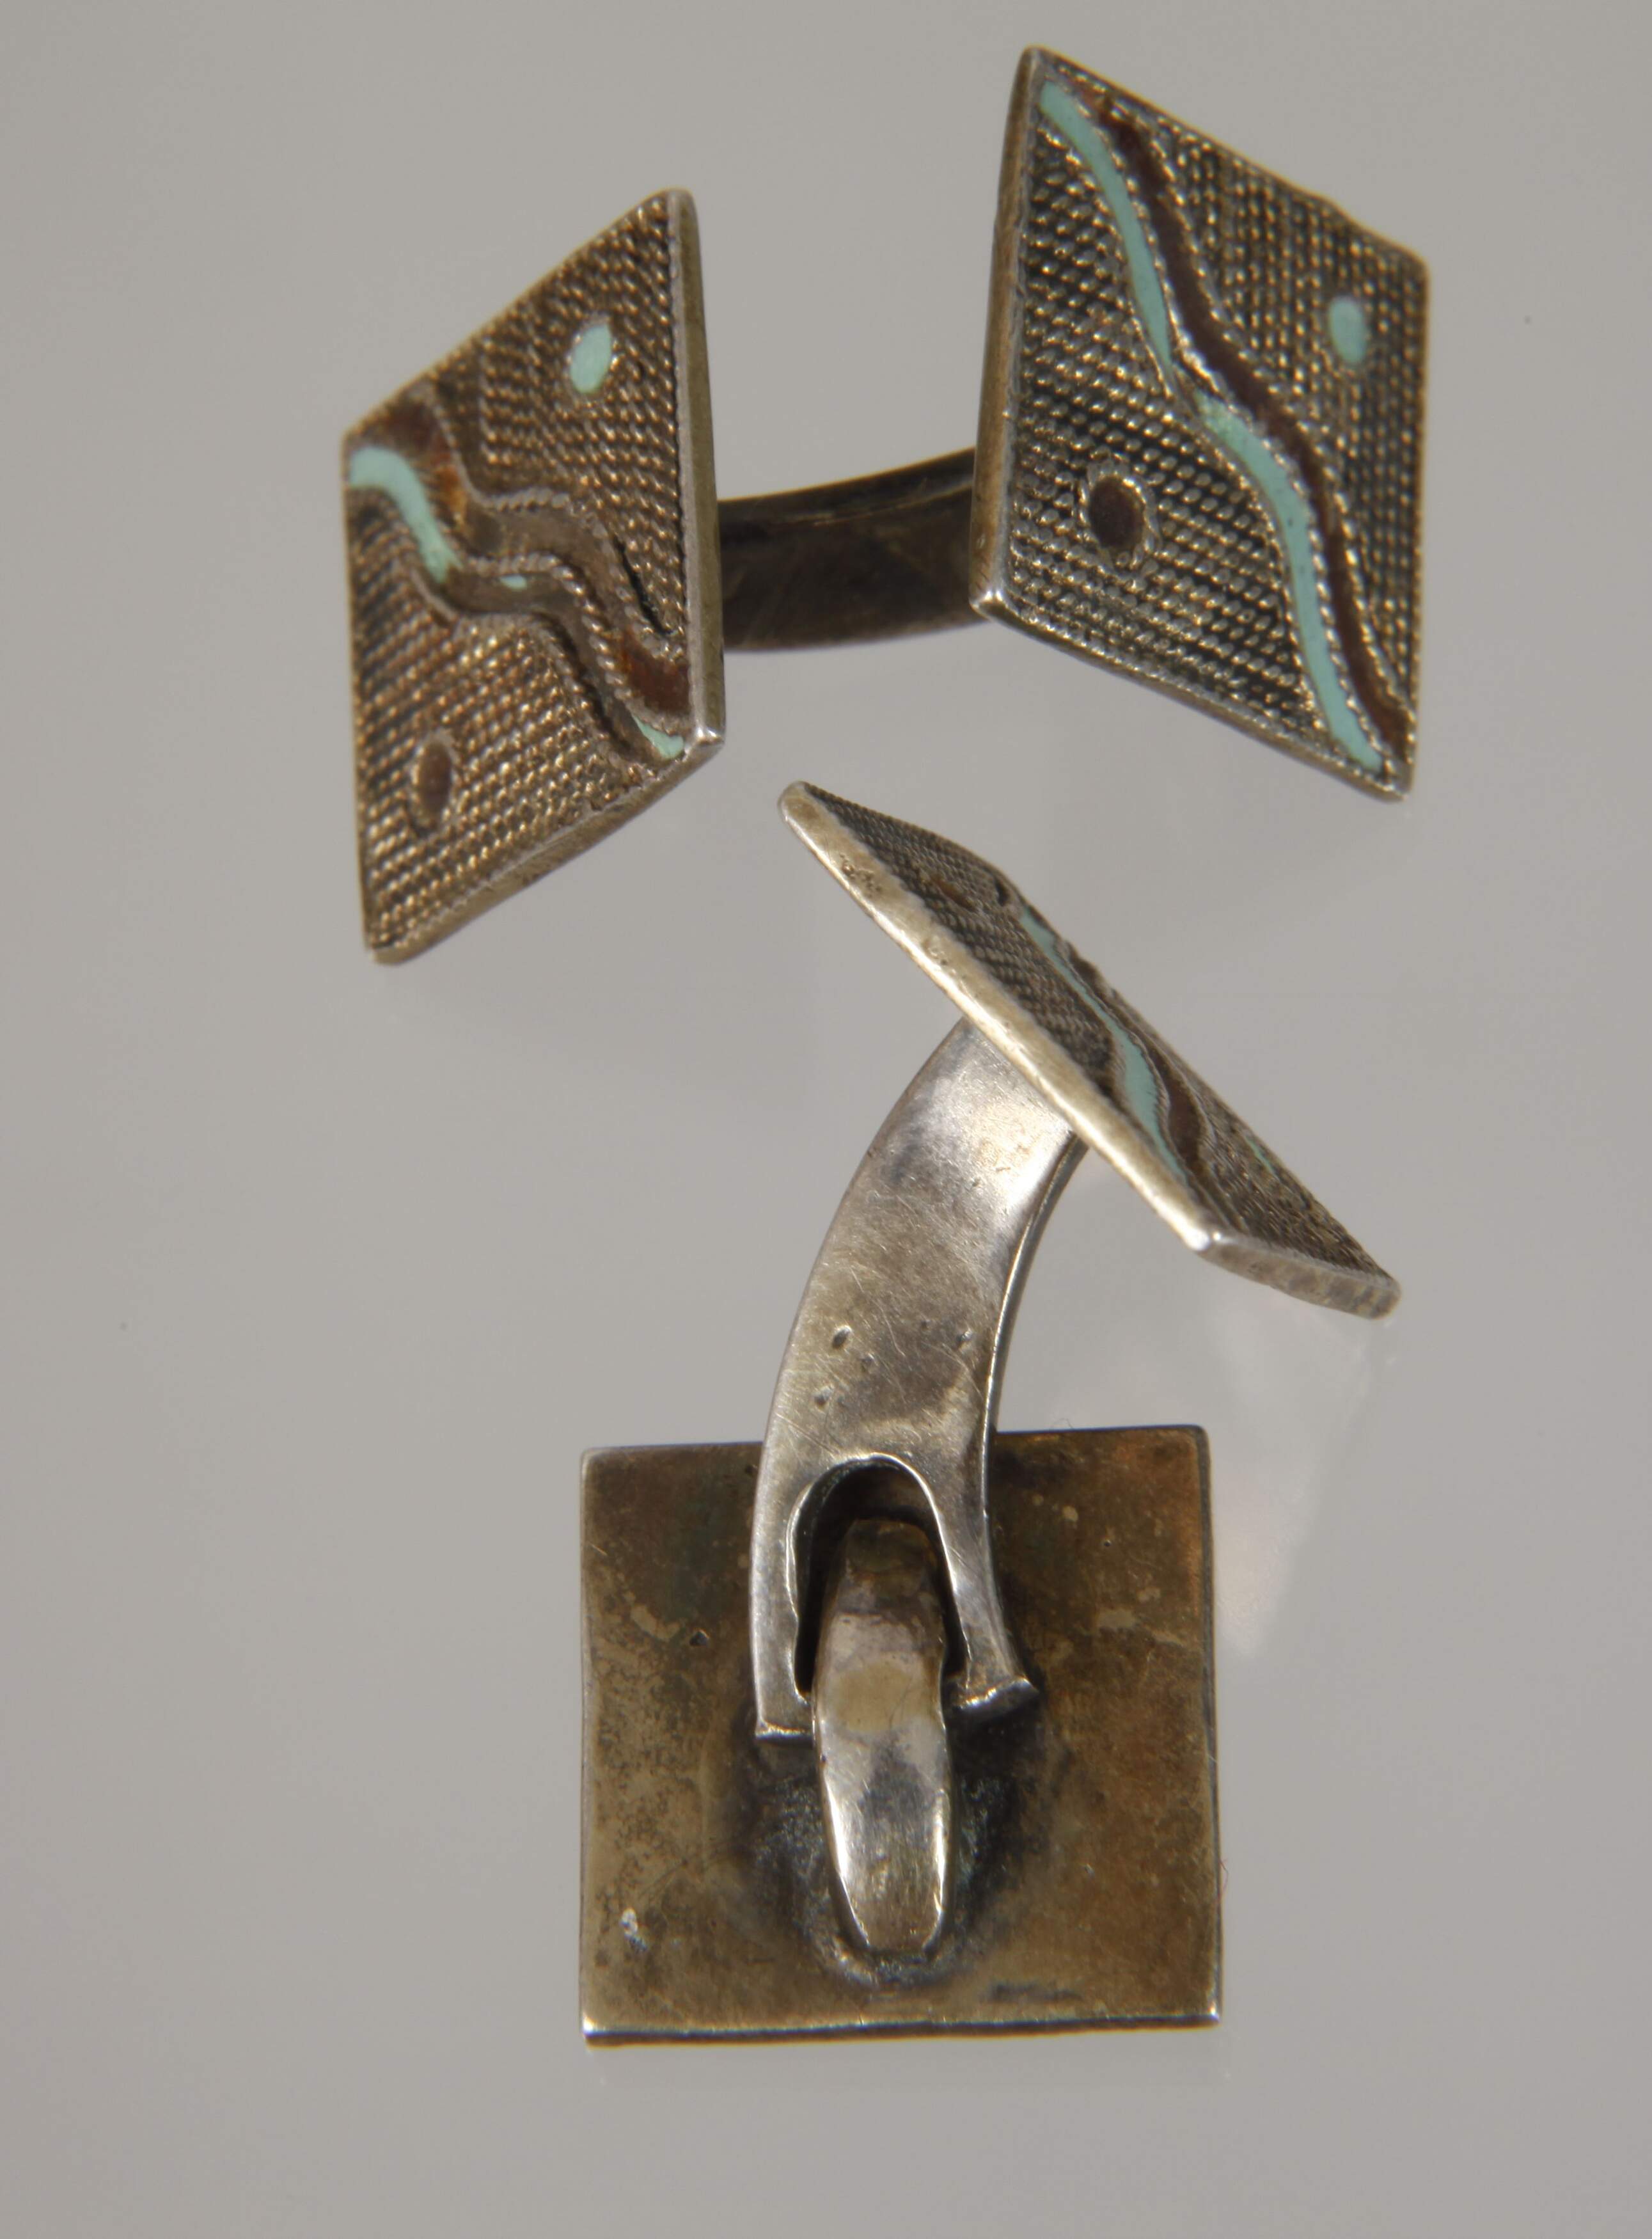 Theodor Fahrner pair of cufflinks - Image 2 of 3